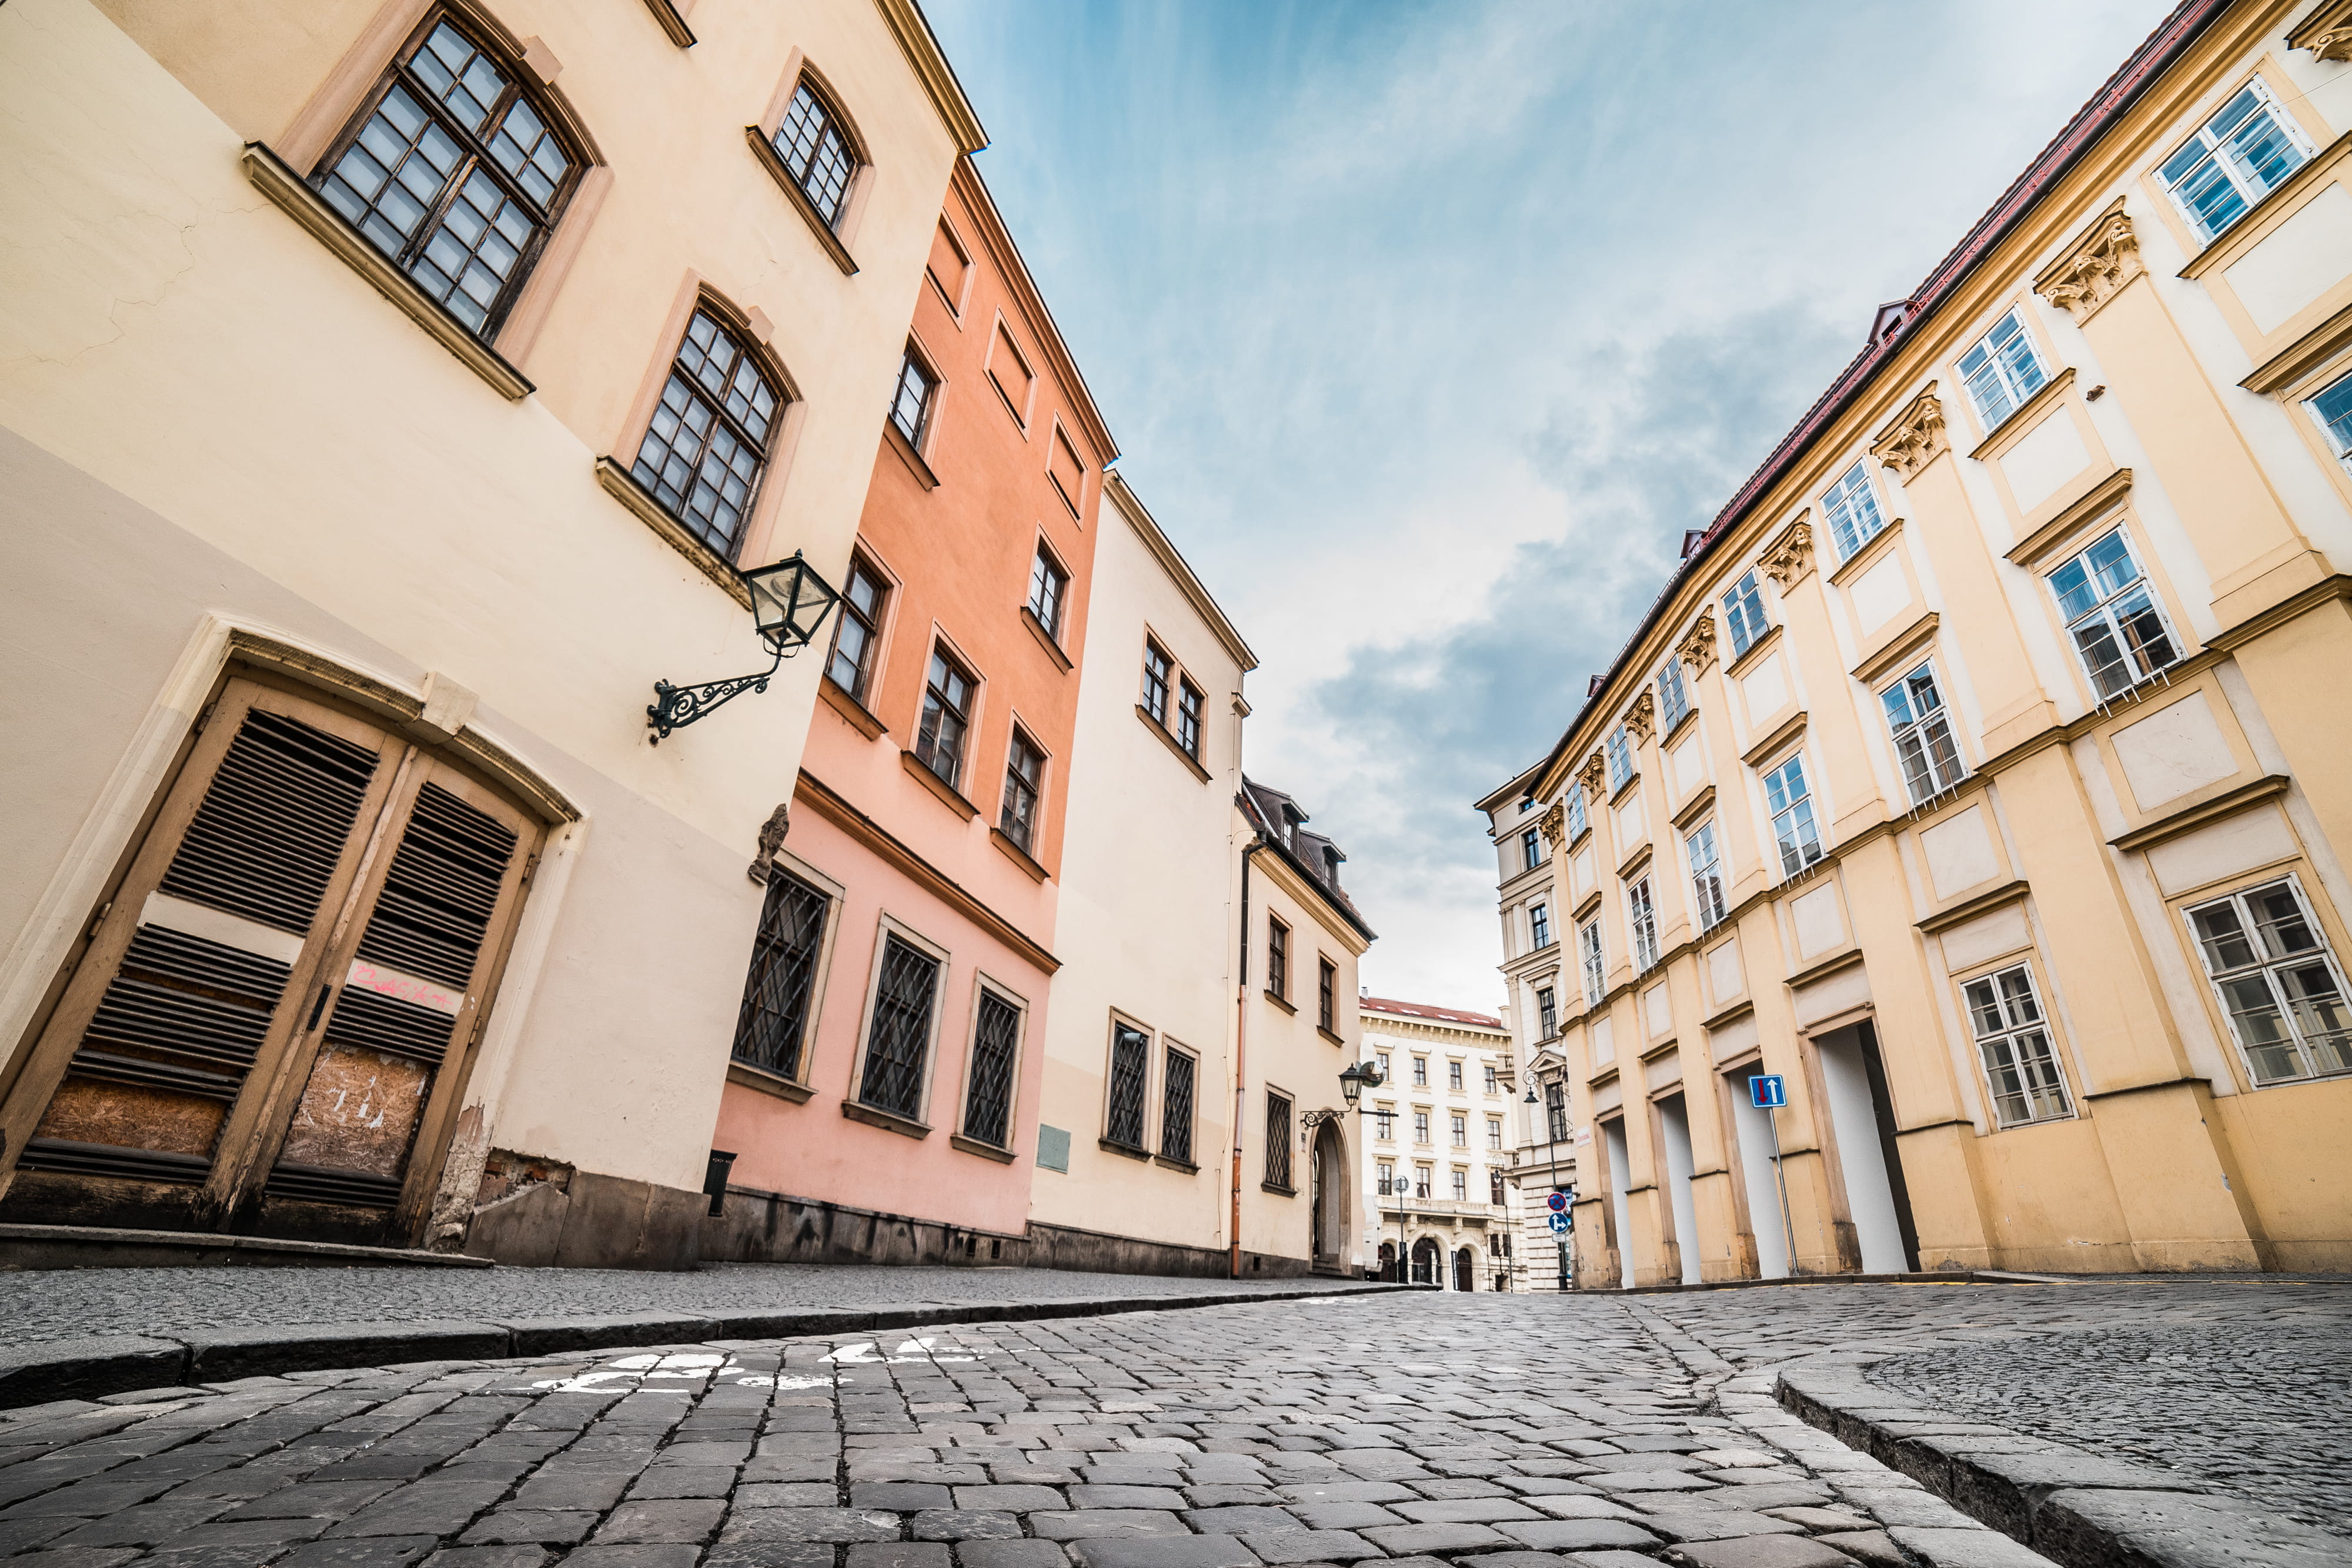 Random Historical Street in Czech Republic, architecture, buildings